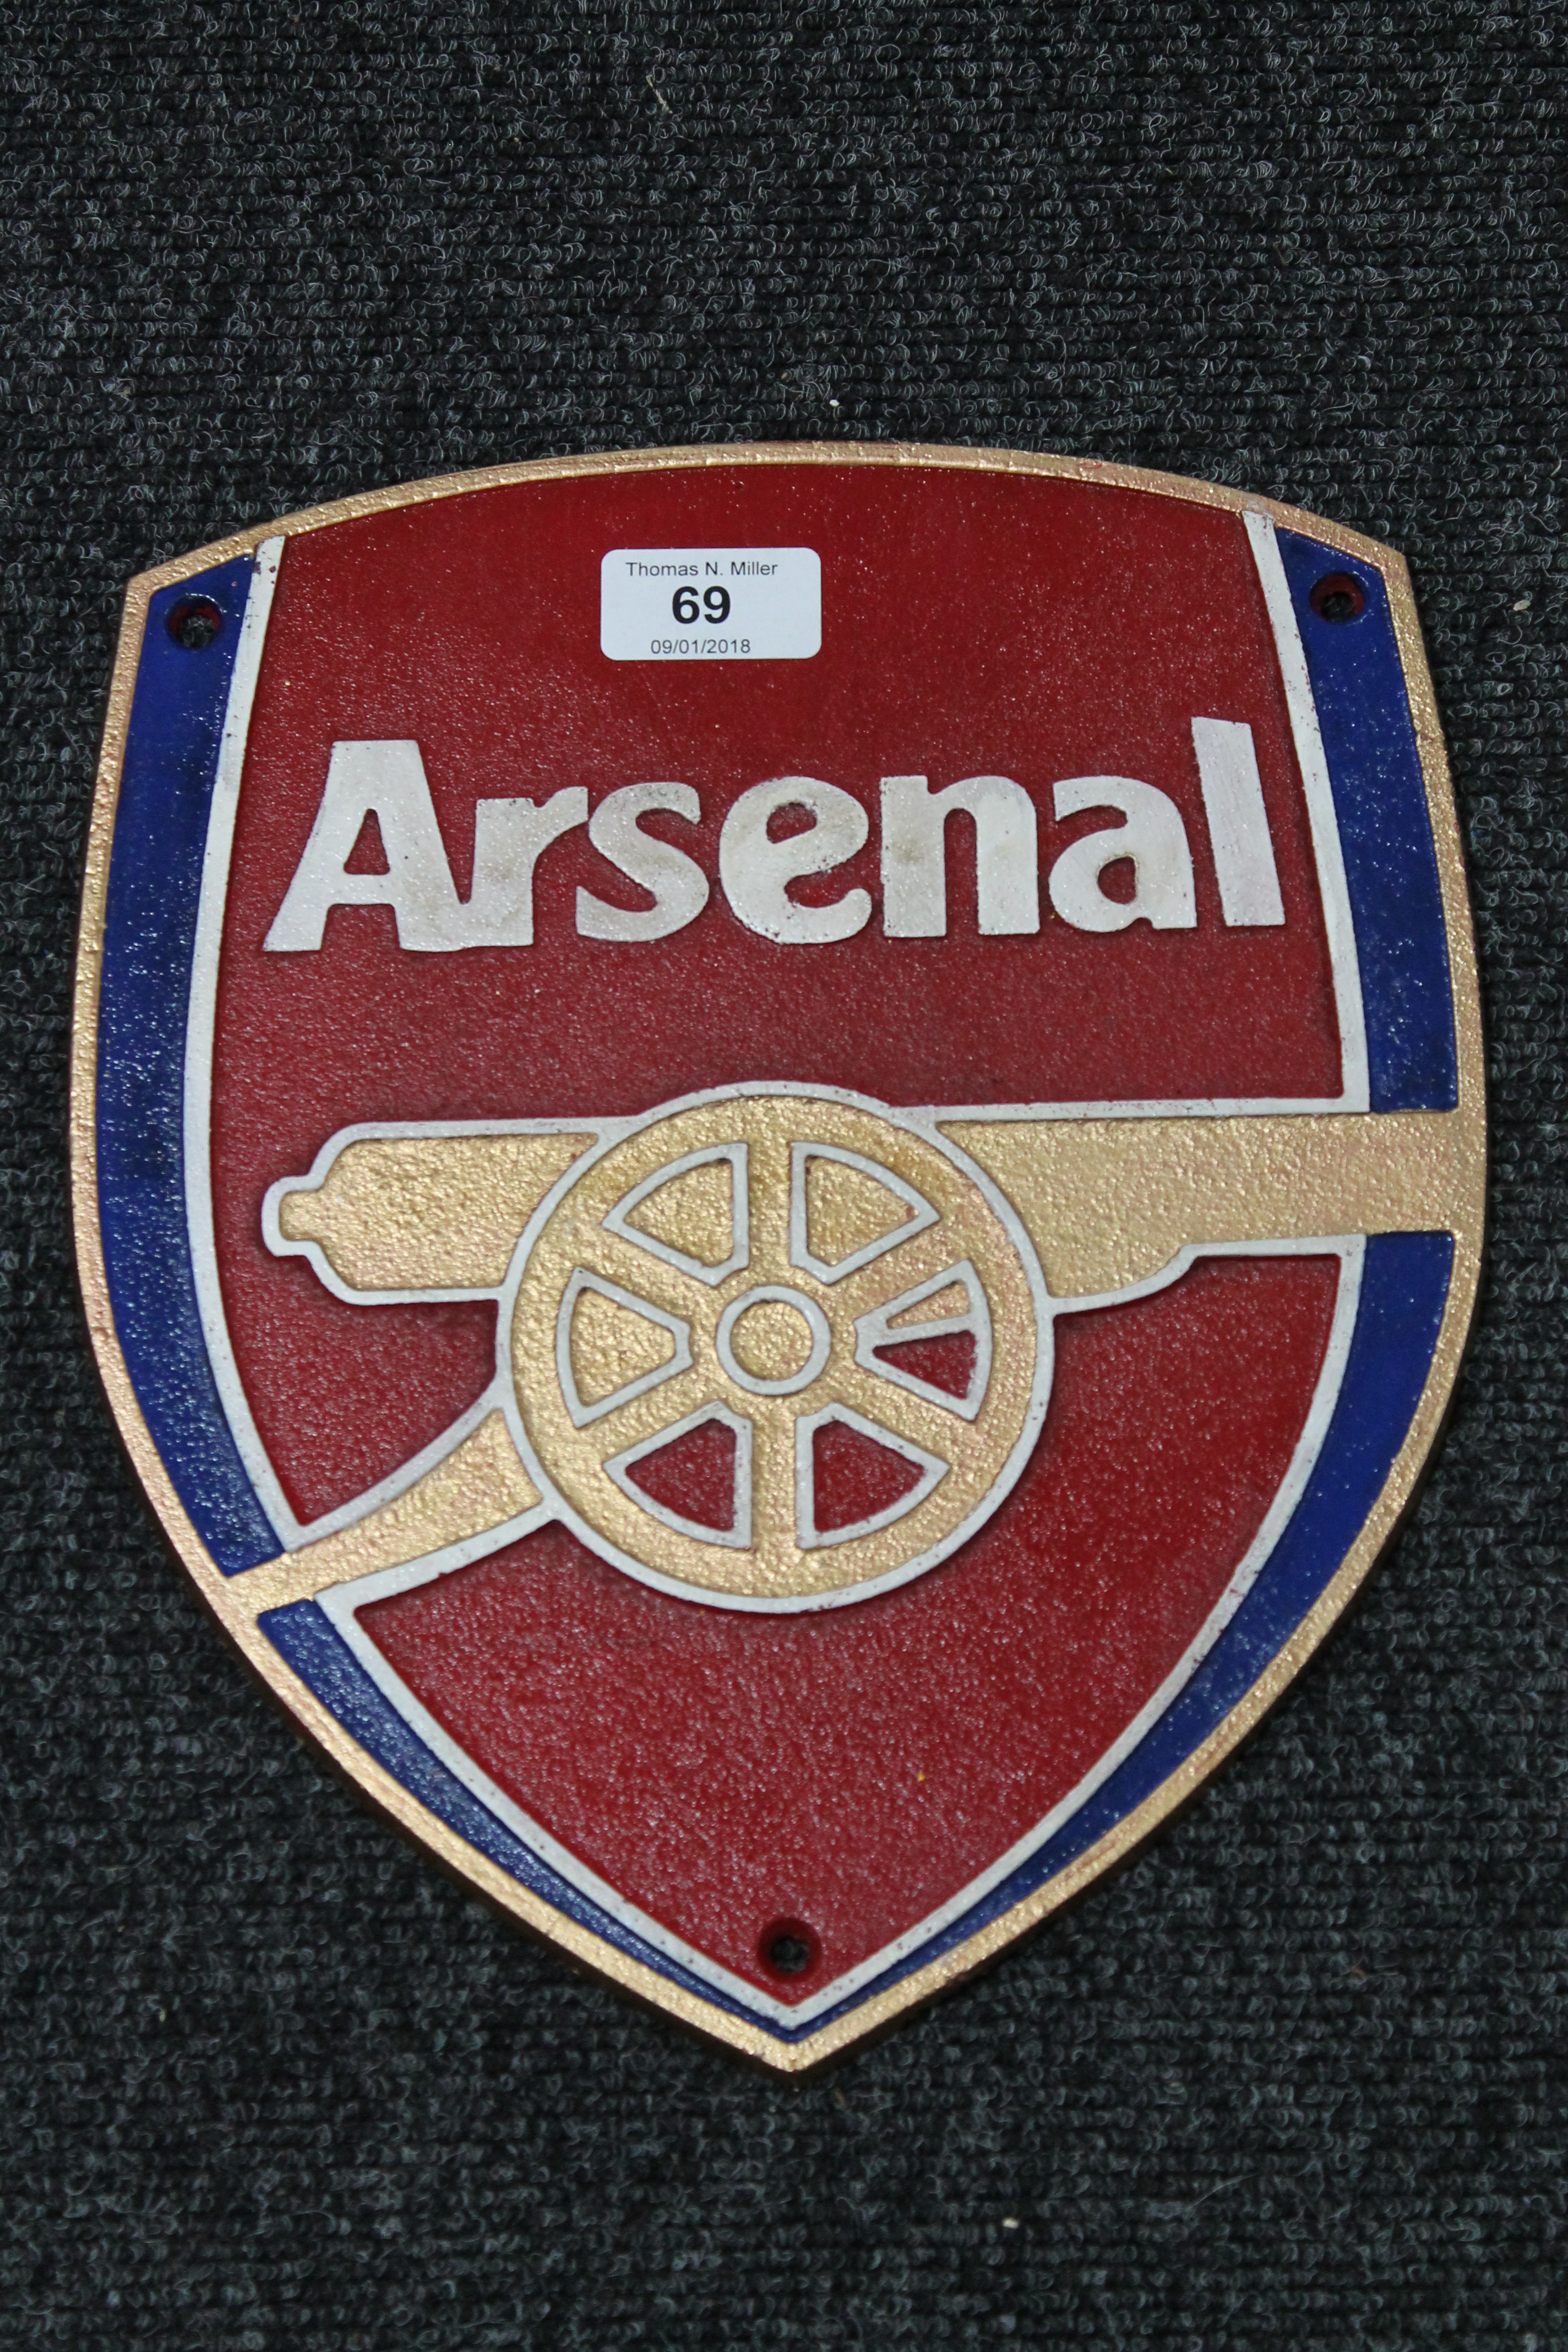 A cast iron Arsenal football plaque